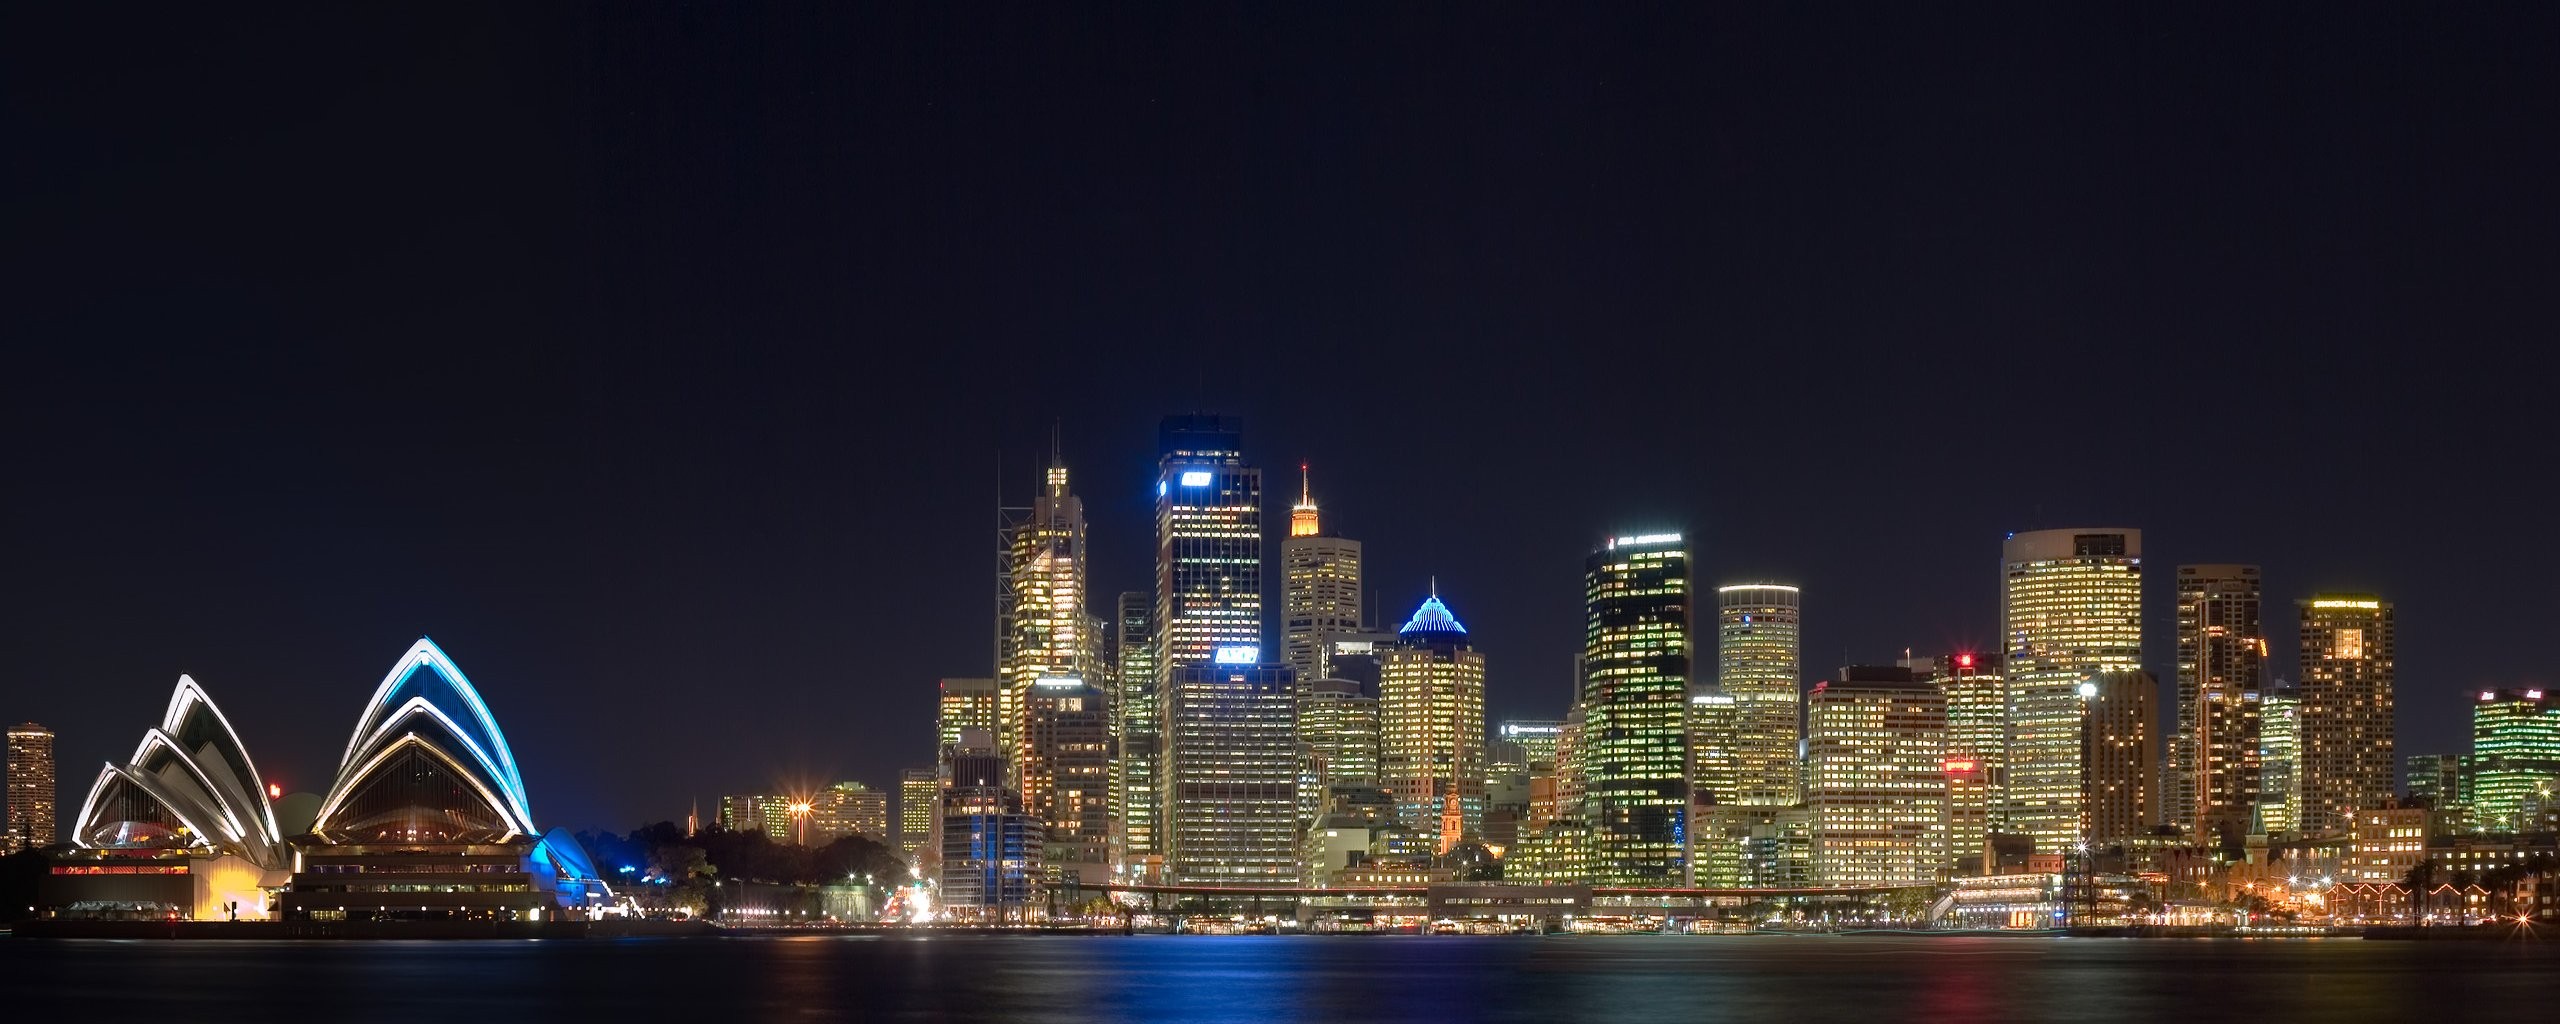 General 2560x1024 Sydney Australia Sydney Opera House cityscape night city lights skyline